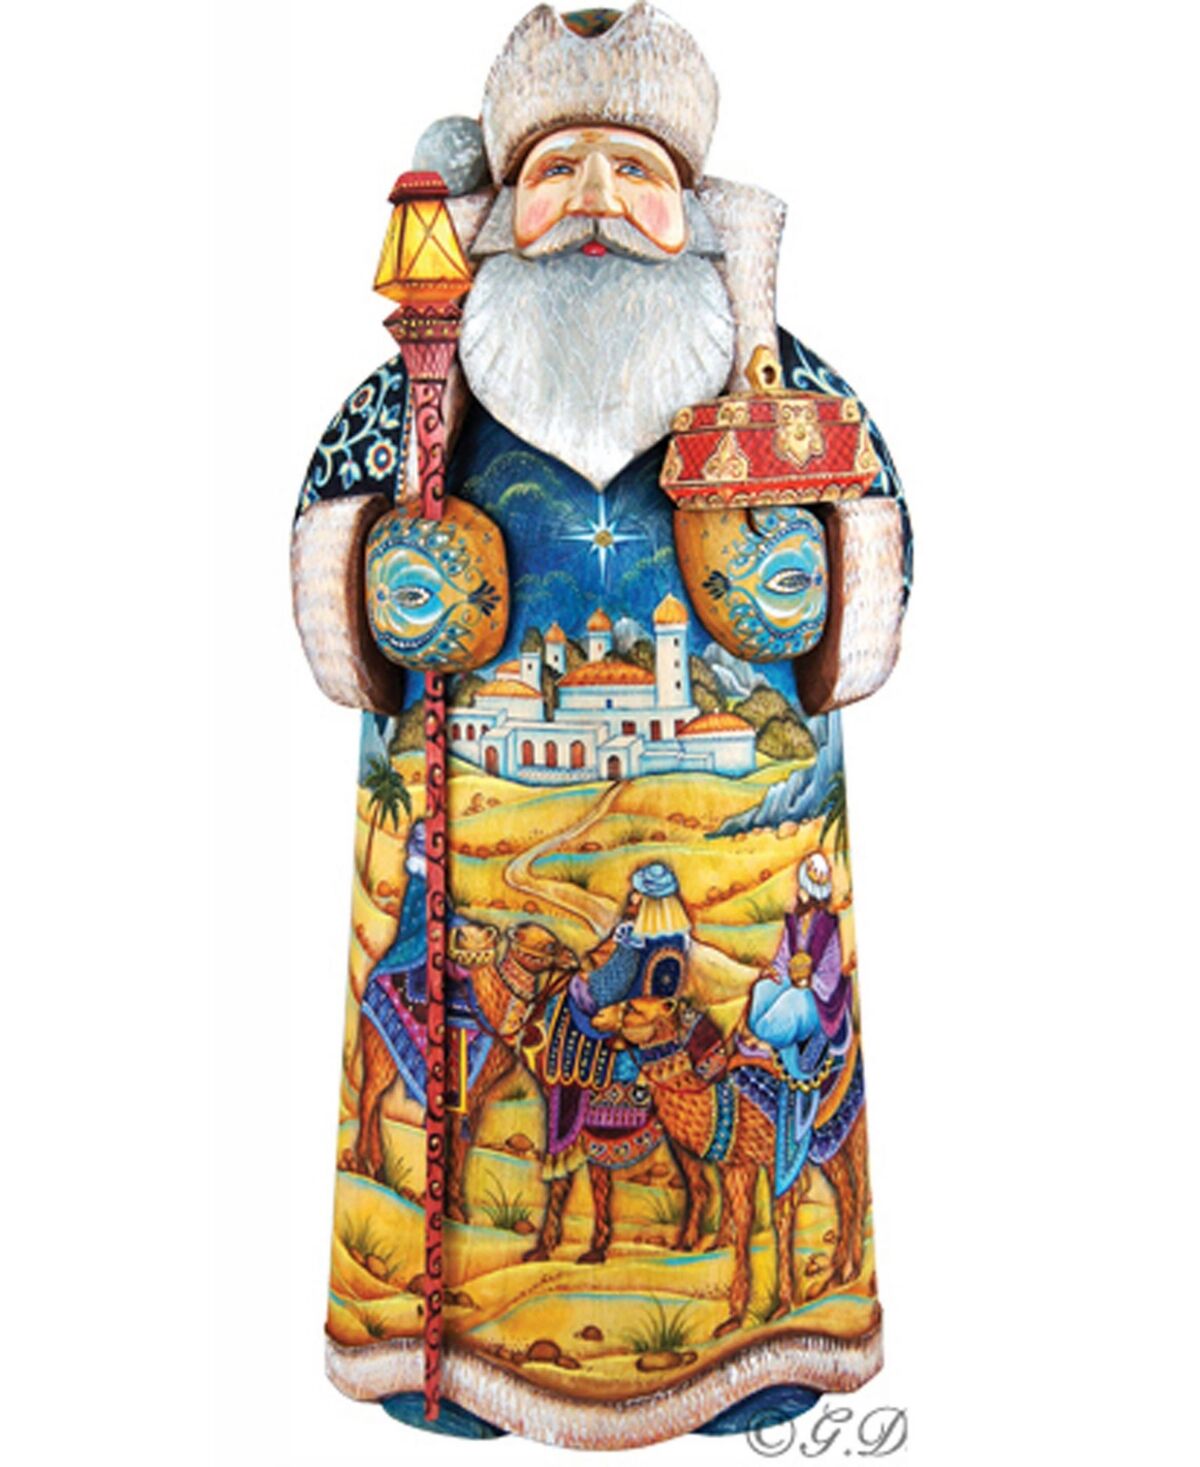 G.DeBrekht Woodcarved and Hand Painted Sharing Joy Village Santa Claus Figurine - Multi